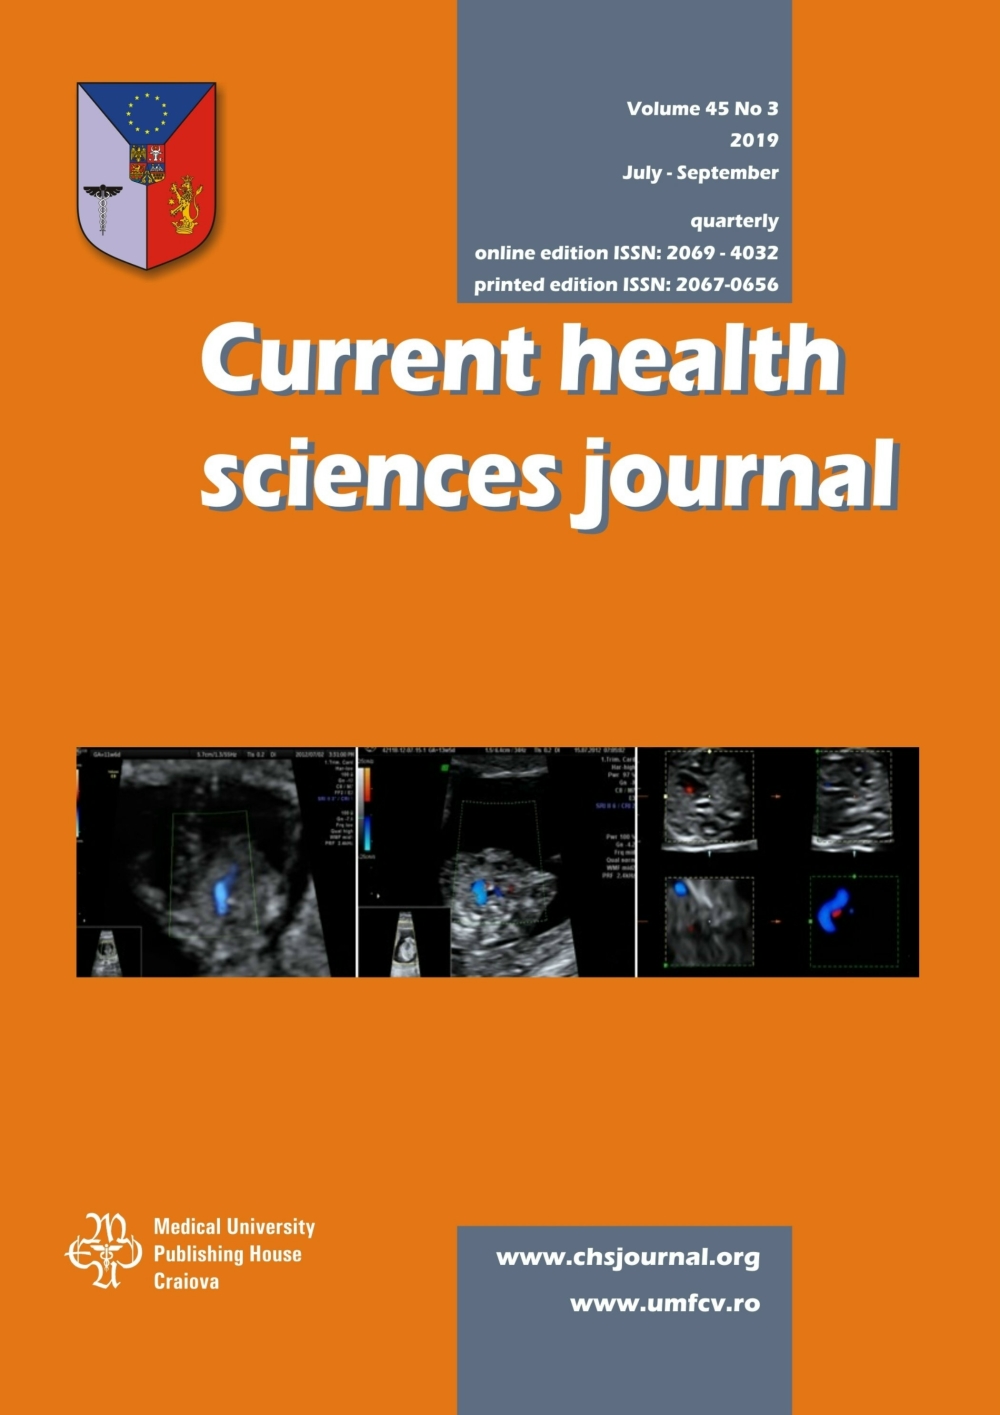 Current Health Sciences Journal, vol. 45 no. 3, 2019